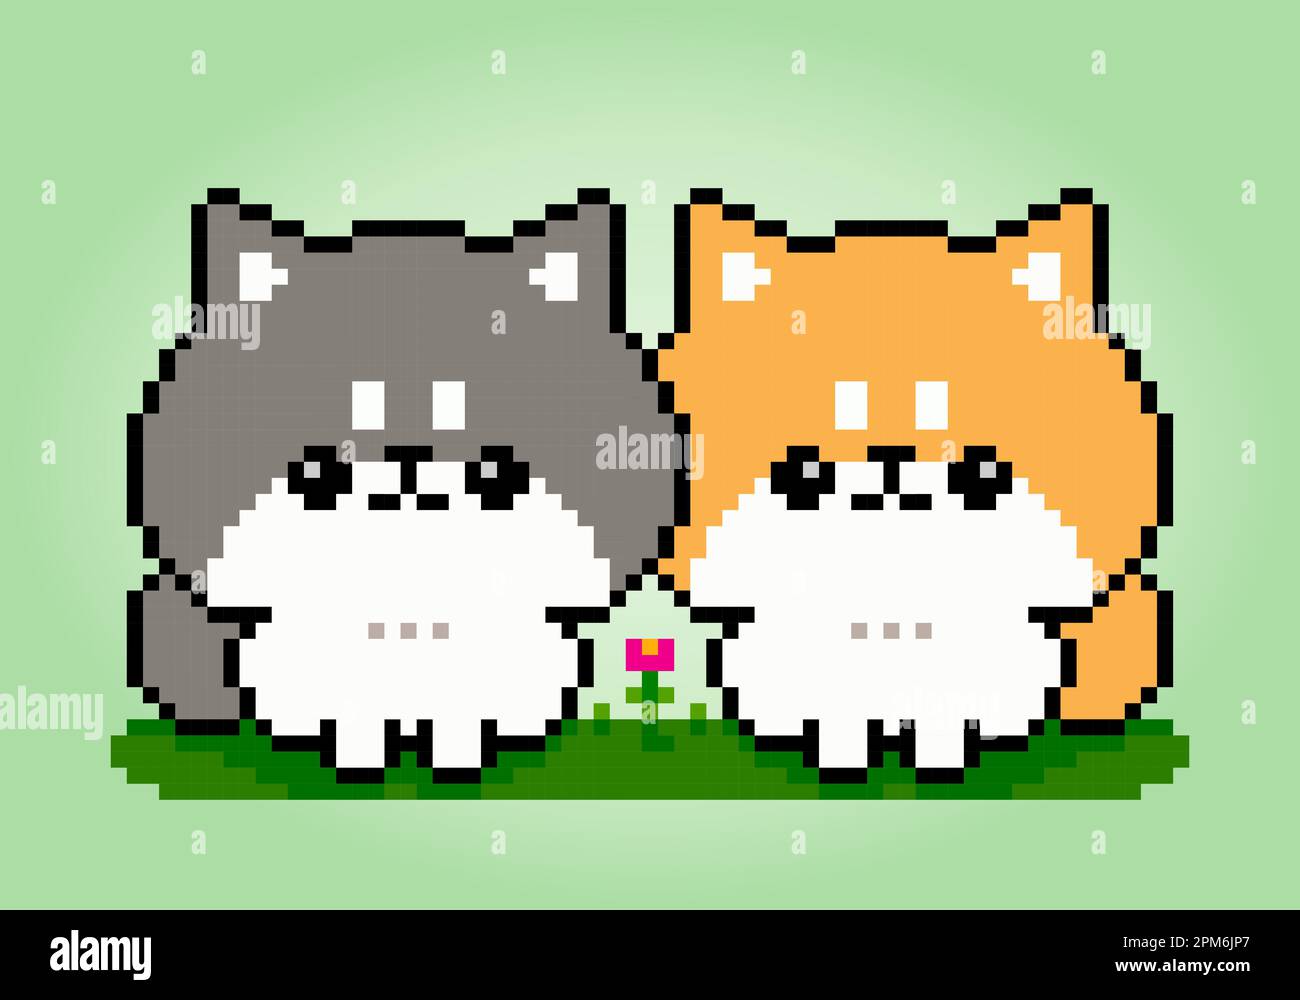 8 bit pixel di due Shiba Inu Dog. Pixel animali per giochi di asset o modelli di Cross Stitch in illustrazioni vettoriali. Illustrazione Vettoriale